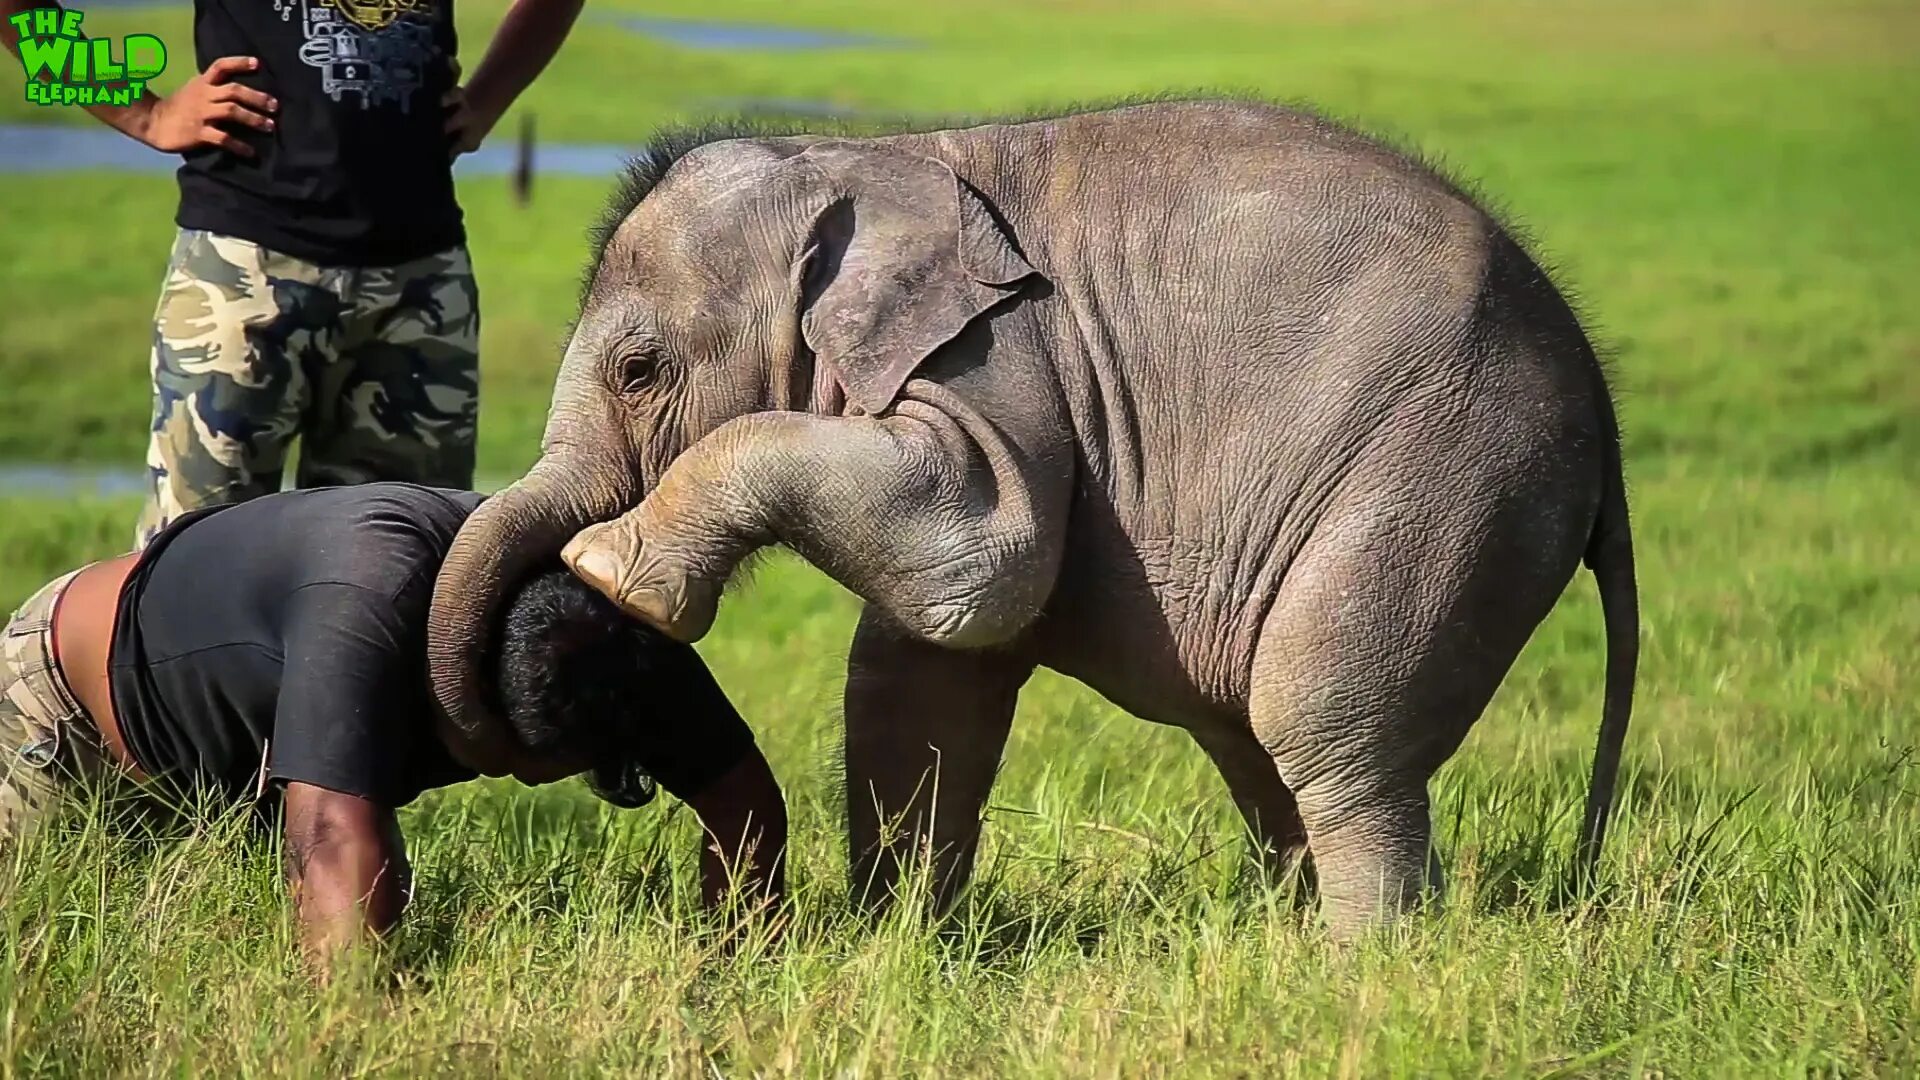 Working elephant. Слоненок. Слонята играют. Слоник играет. Фото играющих слонят.